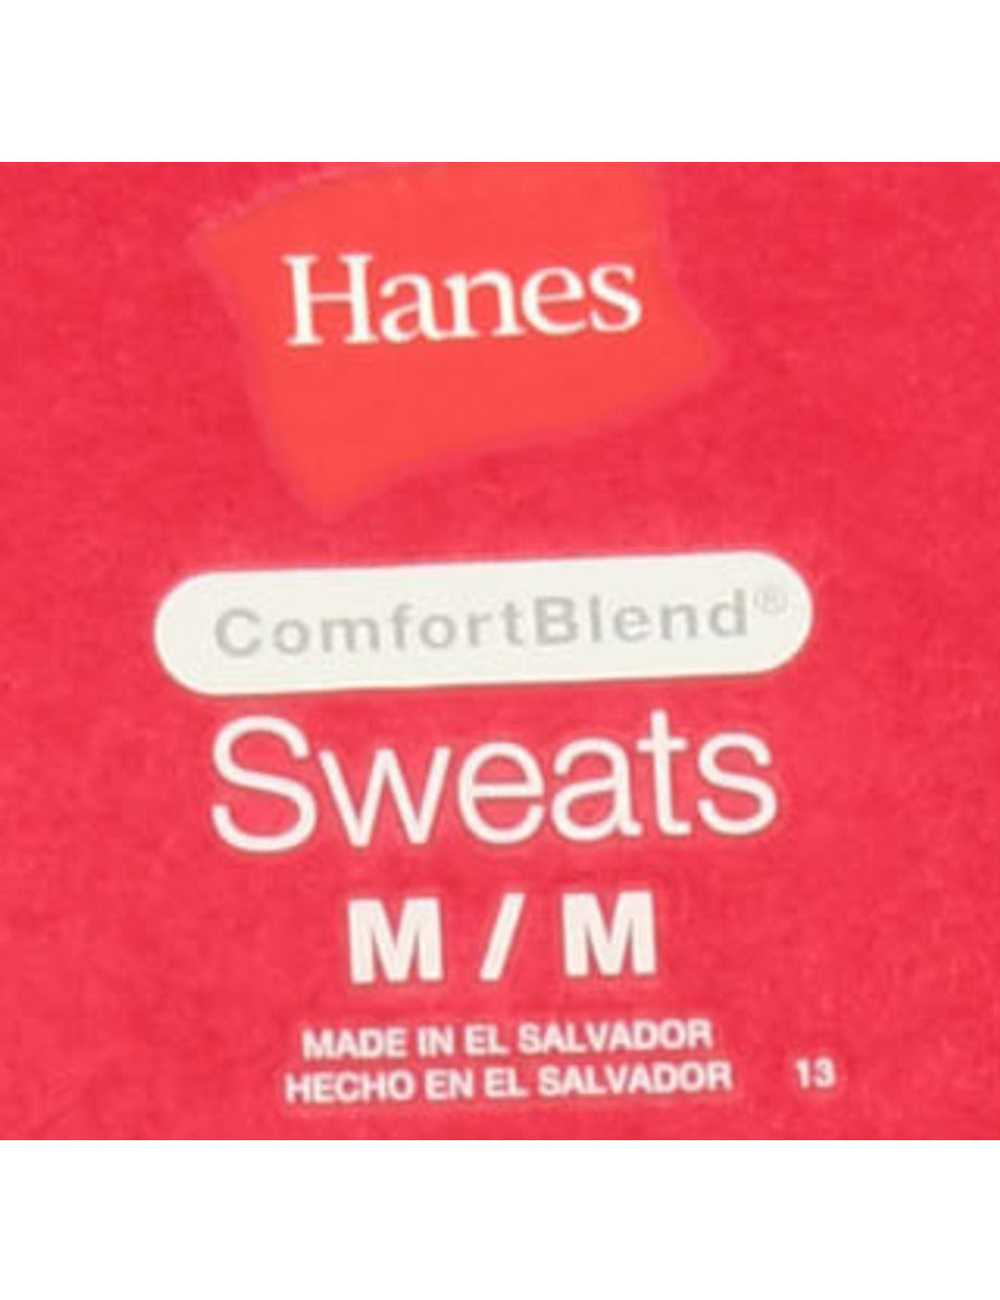 Hanes Plain Sweatshirt - M - image 4